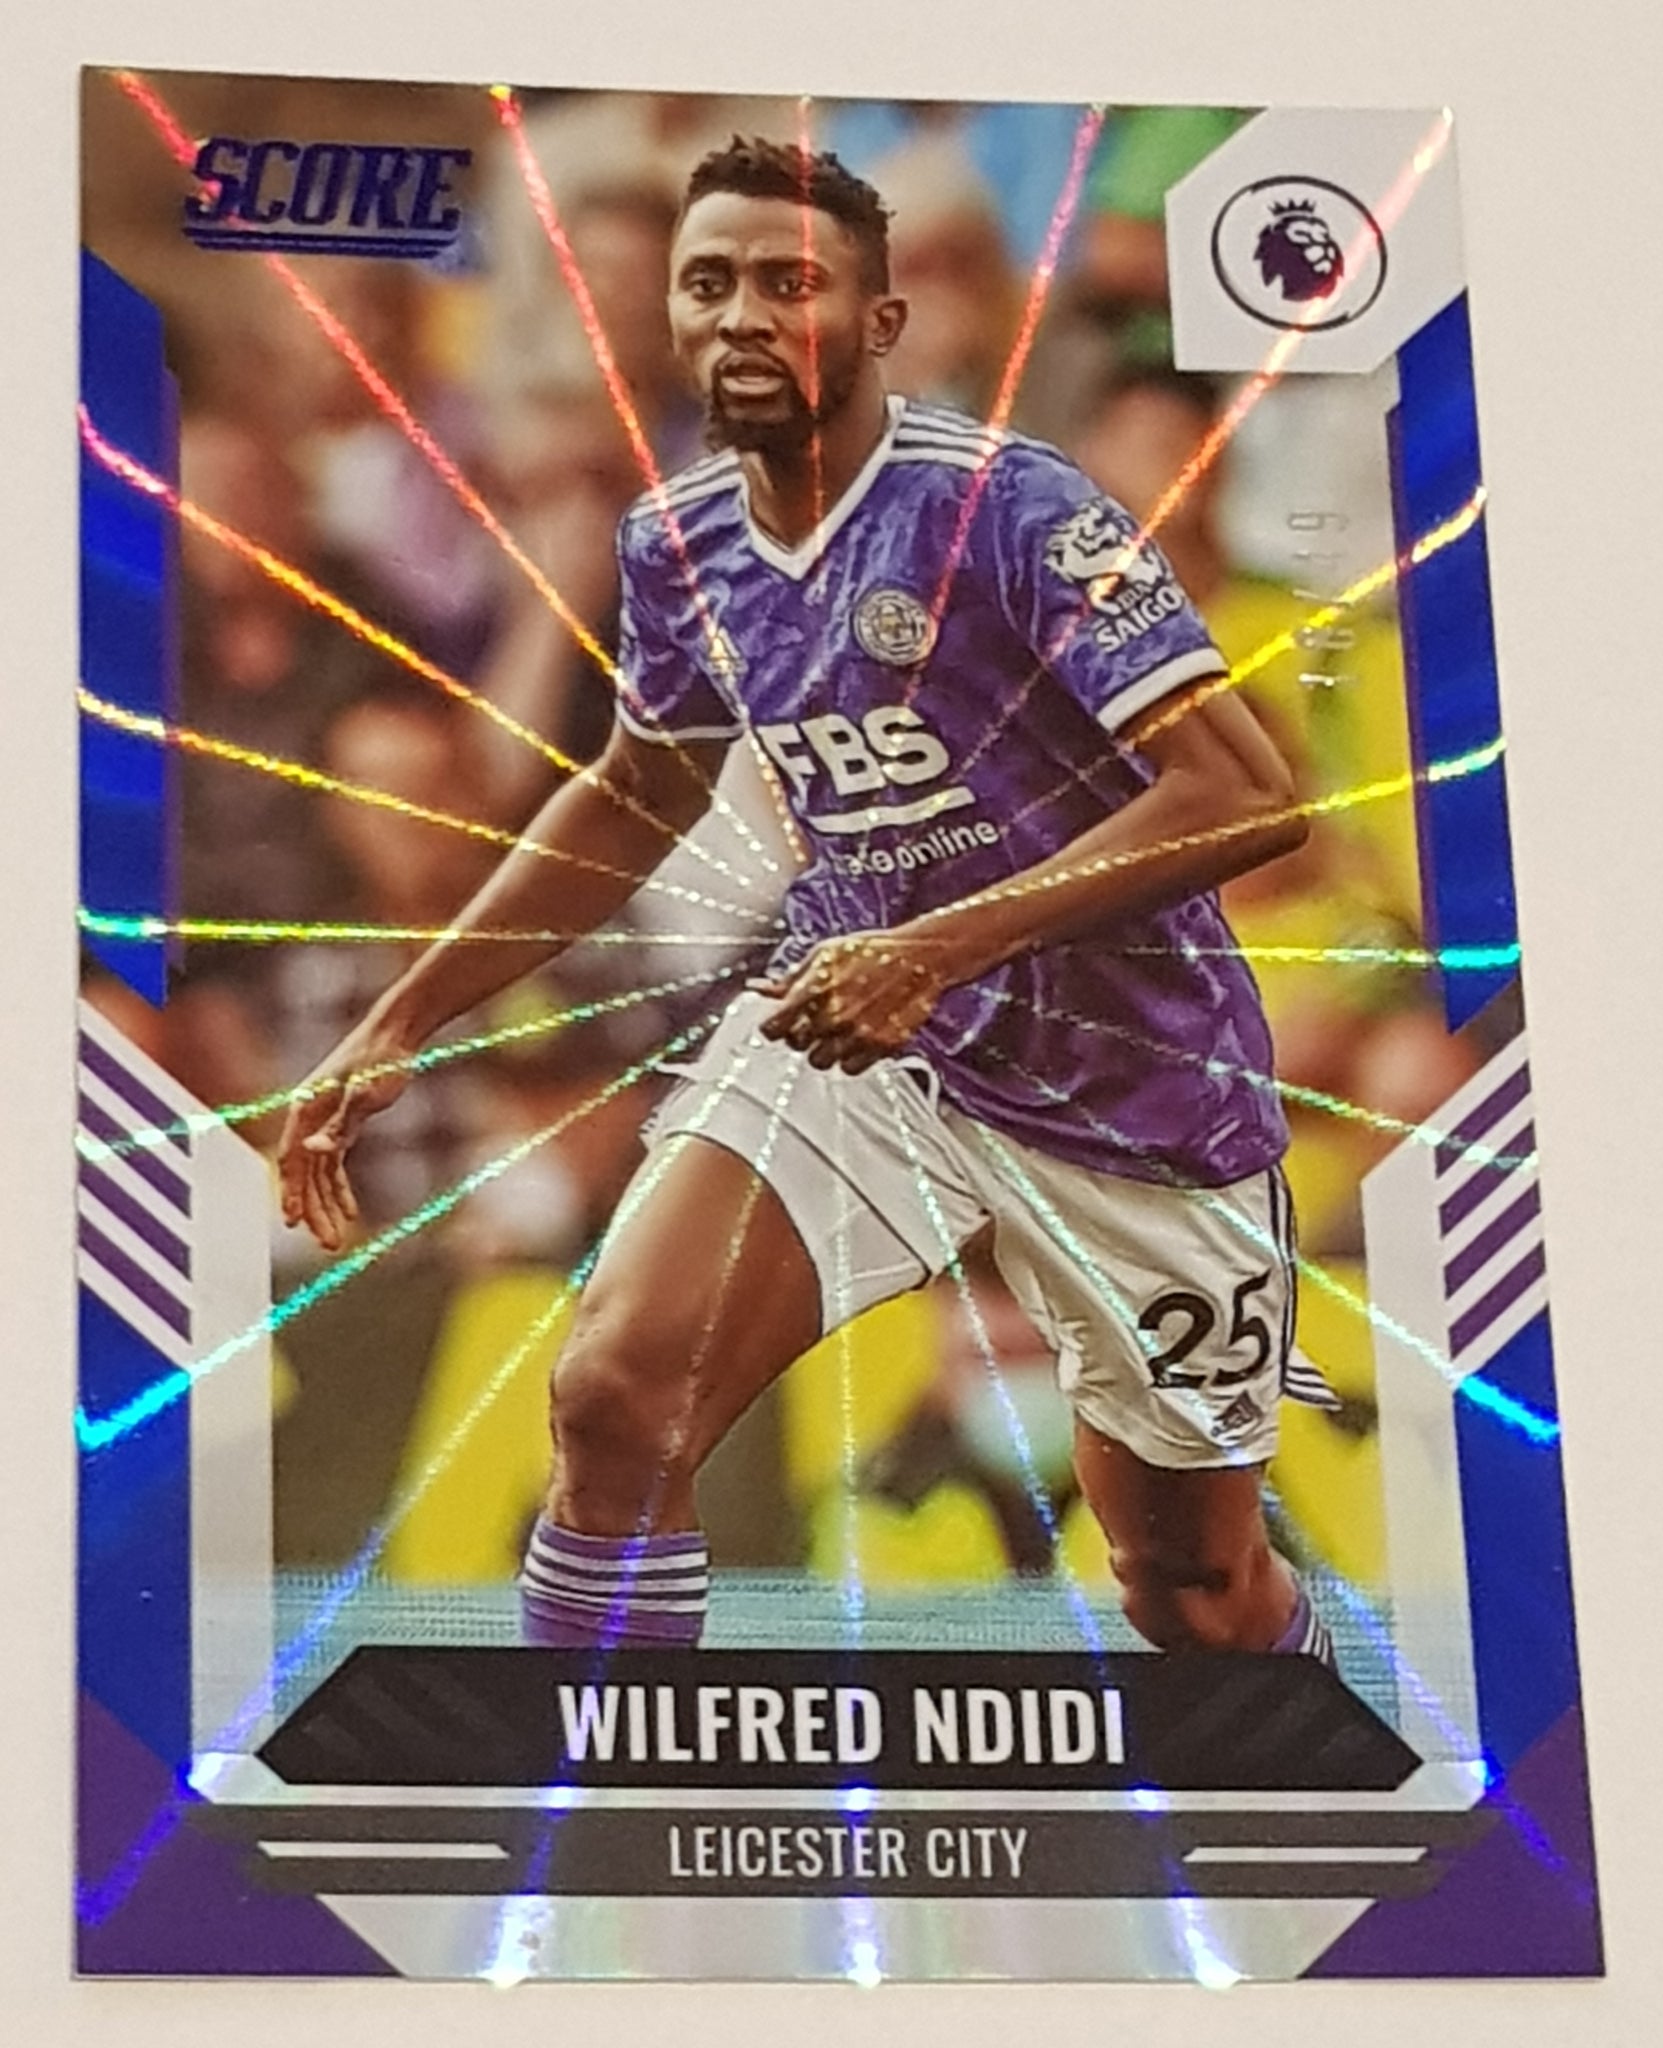 2021-22 Panini Score Premier League Wilfred Ndidi #98 Blue Laser Parallel /49 Trading Card